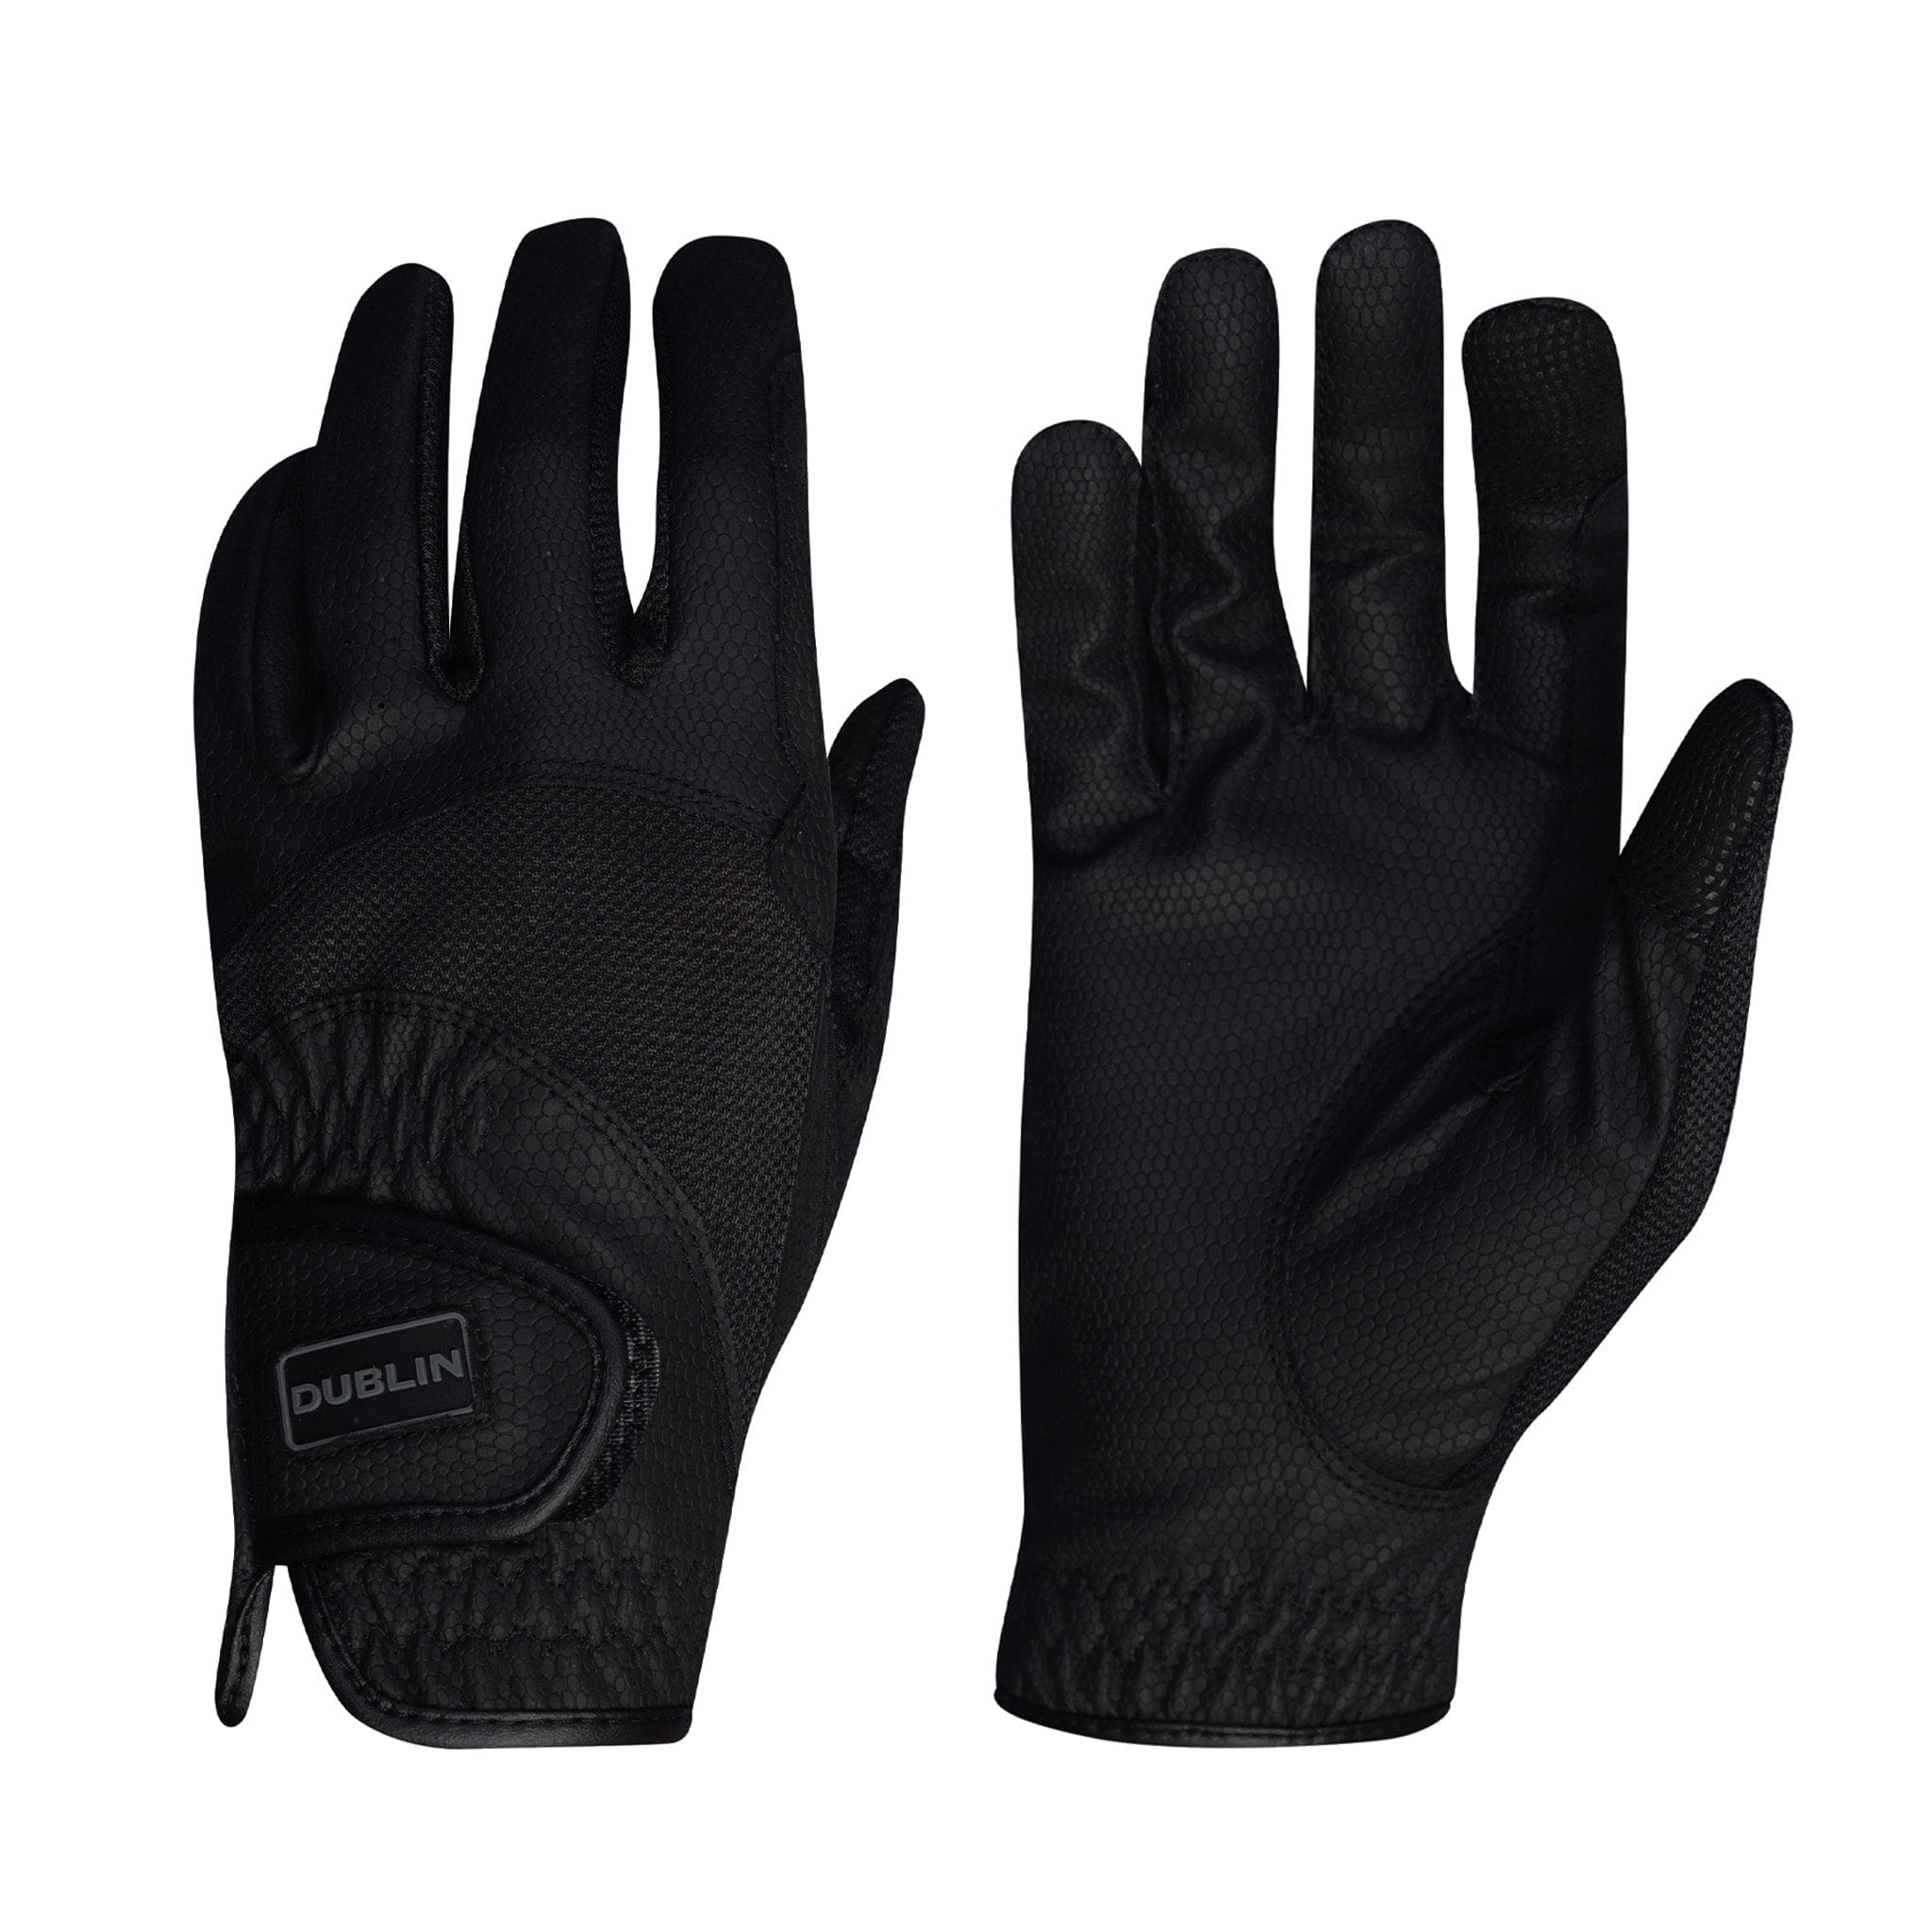 Dublin Mesh Panel Riding Gloves 1007087001 Black Pair